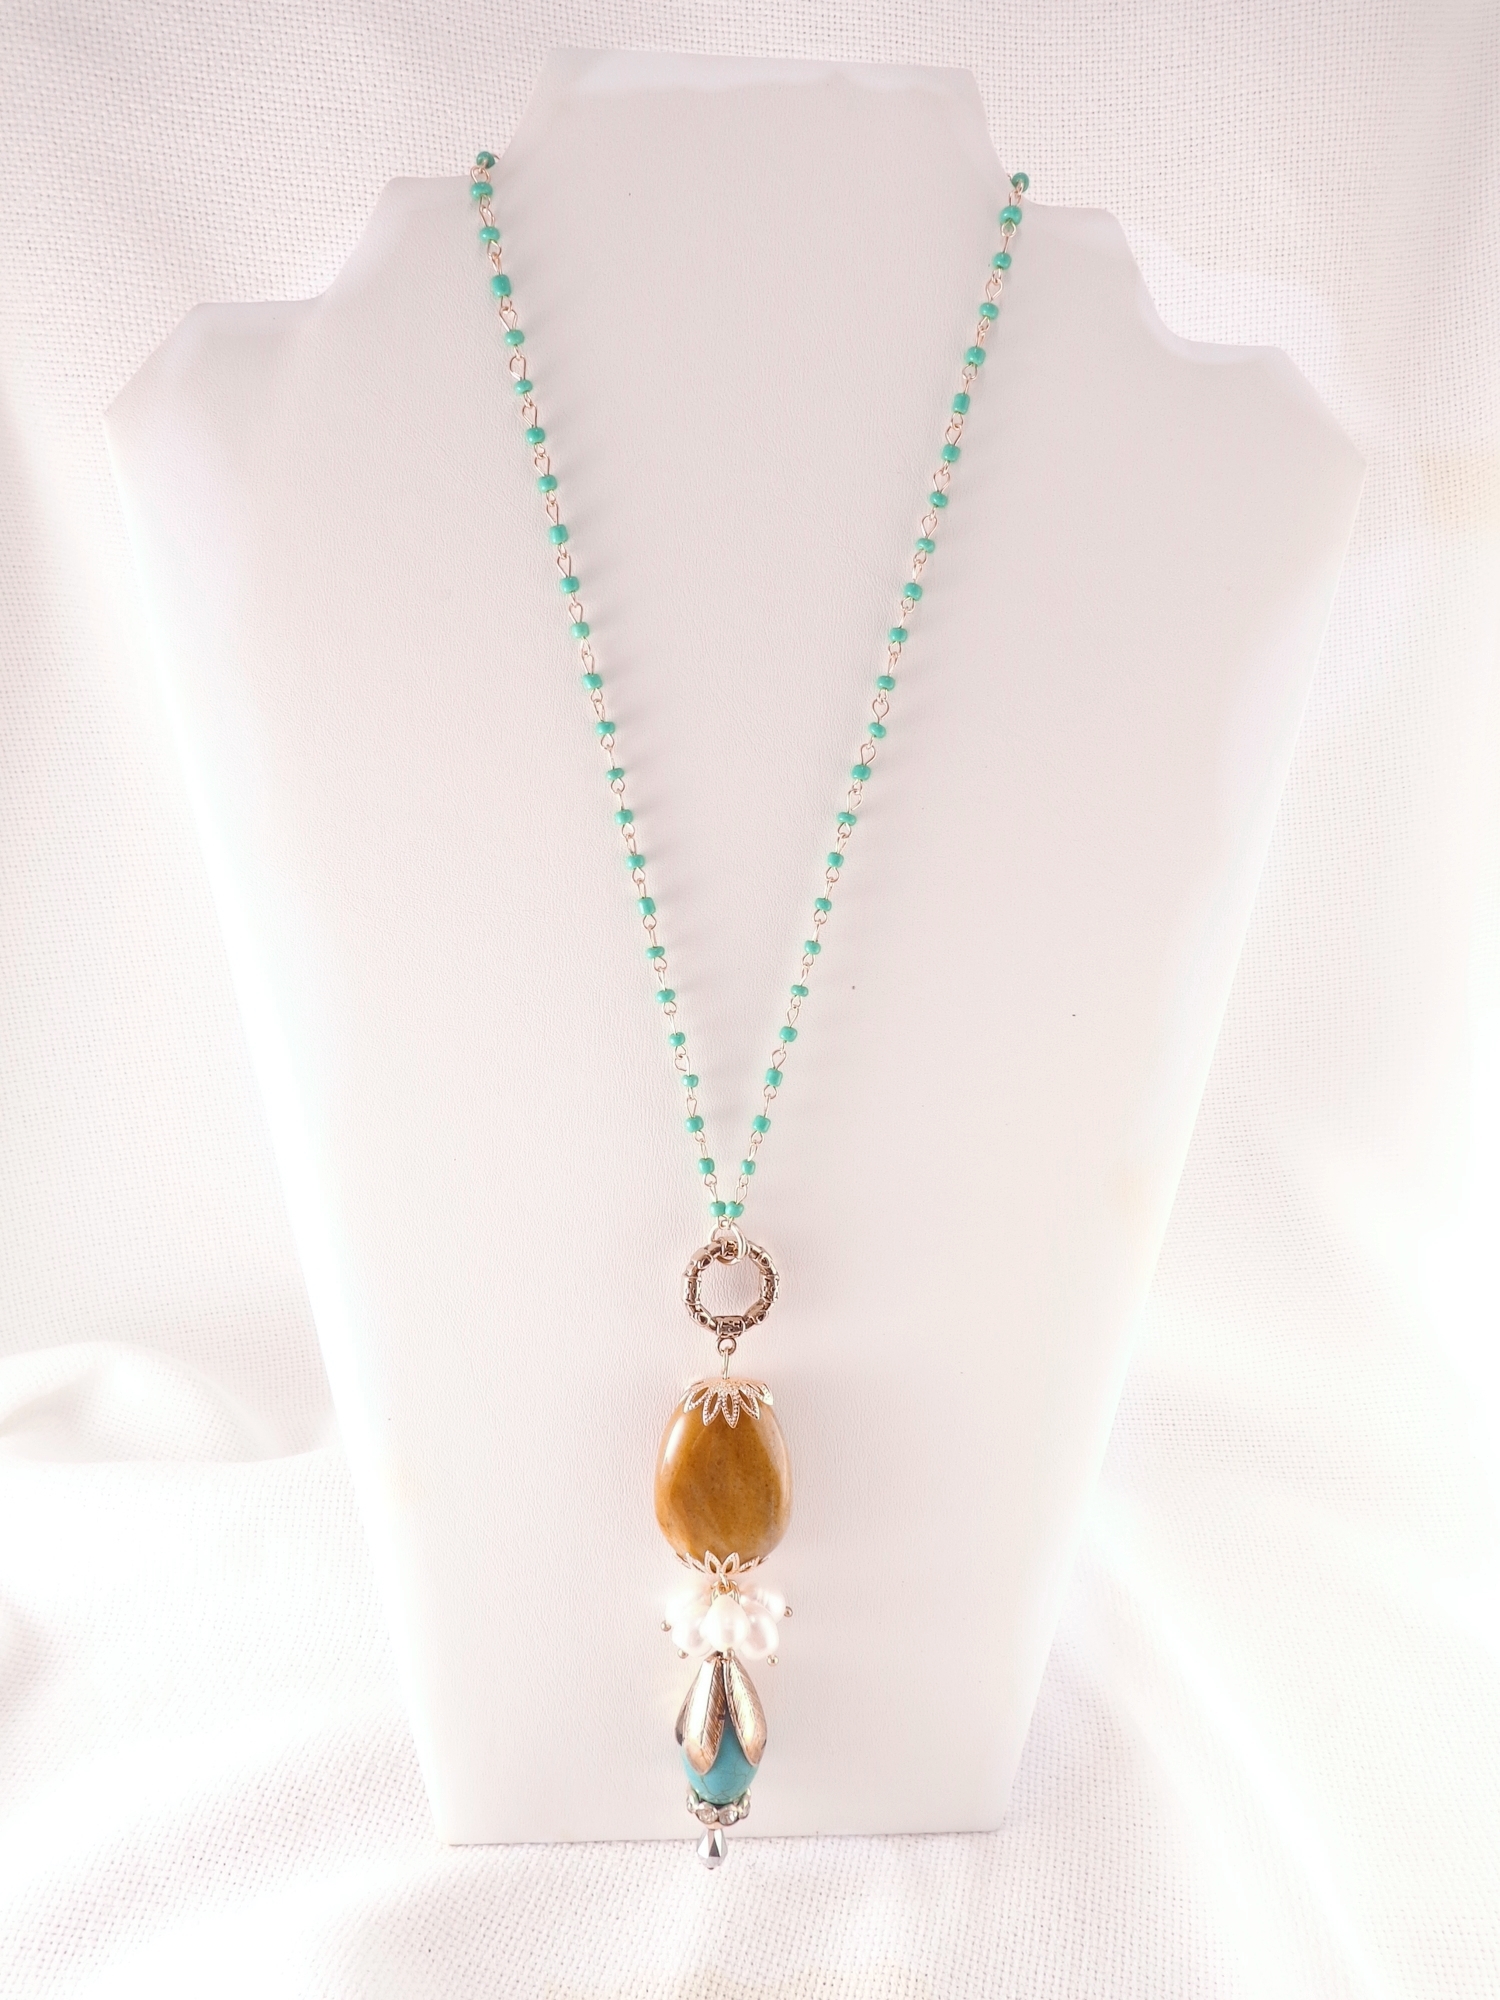 Long Necklaces | Lydia Lister Jewelry | Sheila Fajl, Akola Project ...